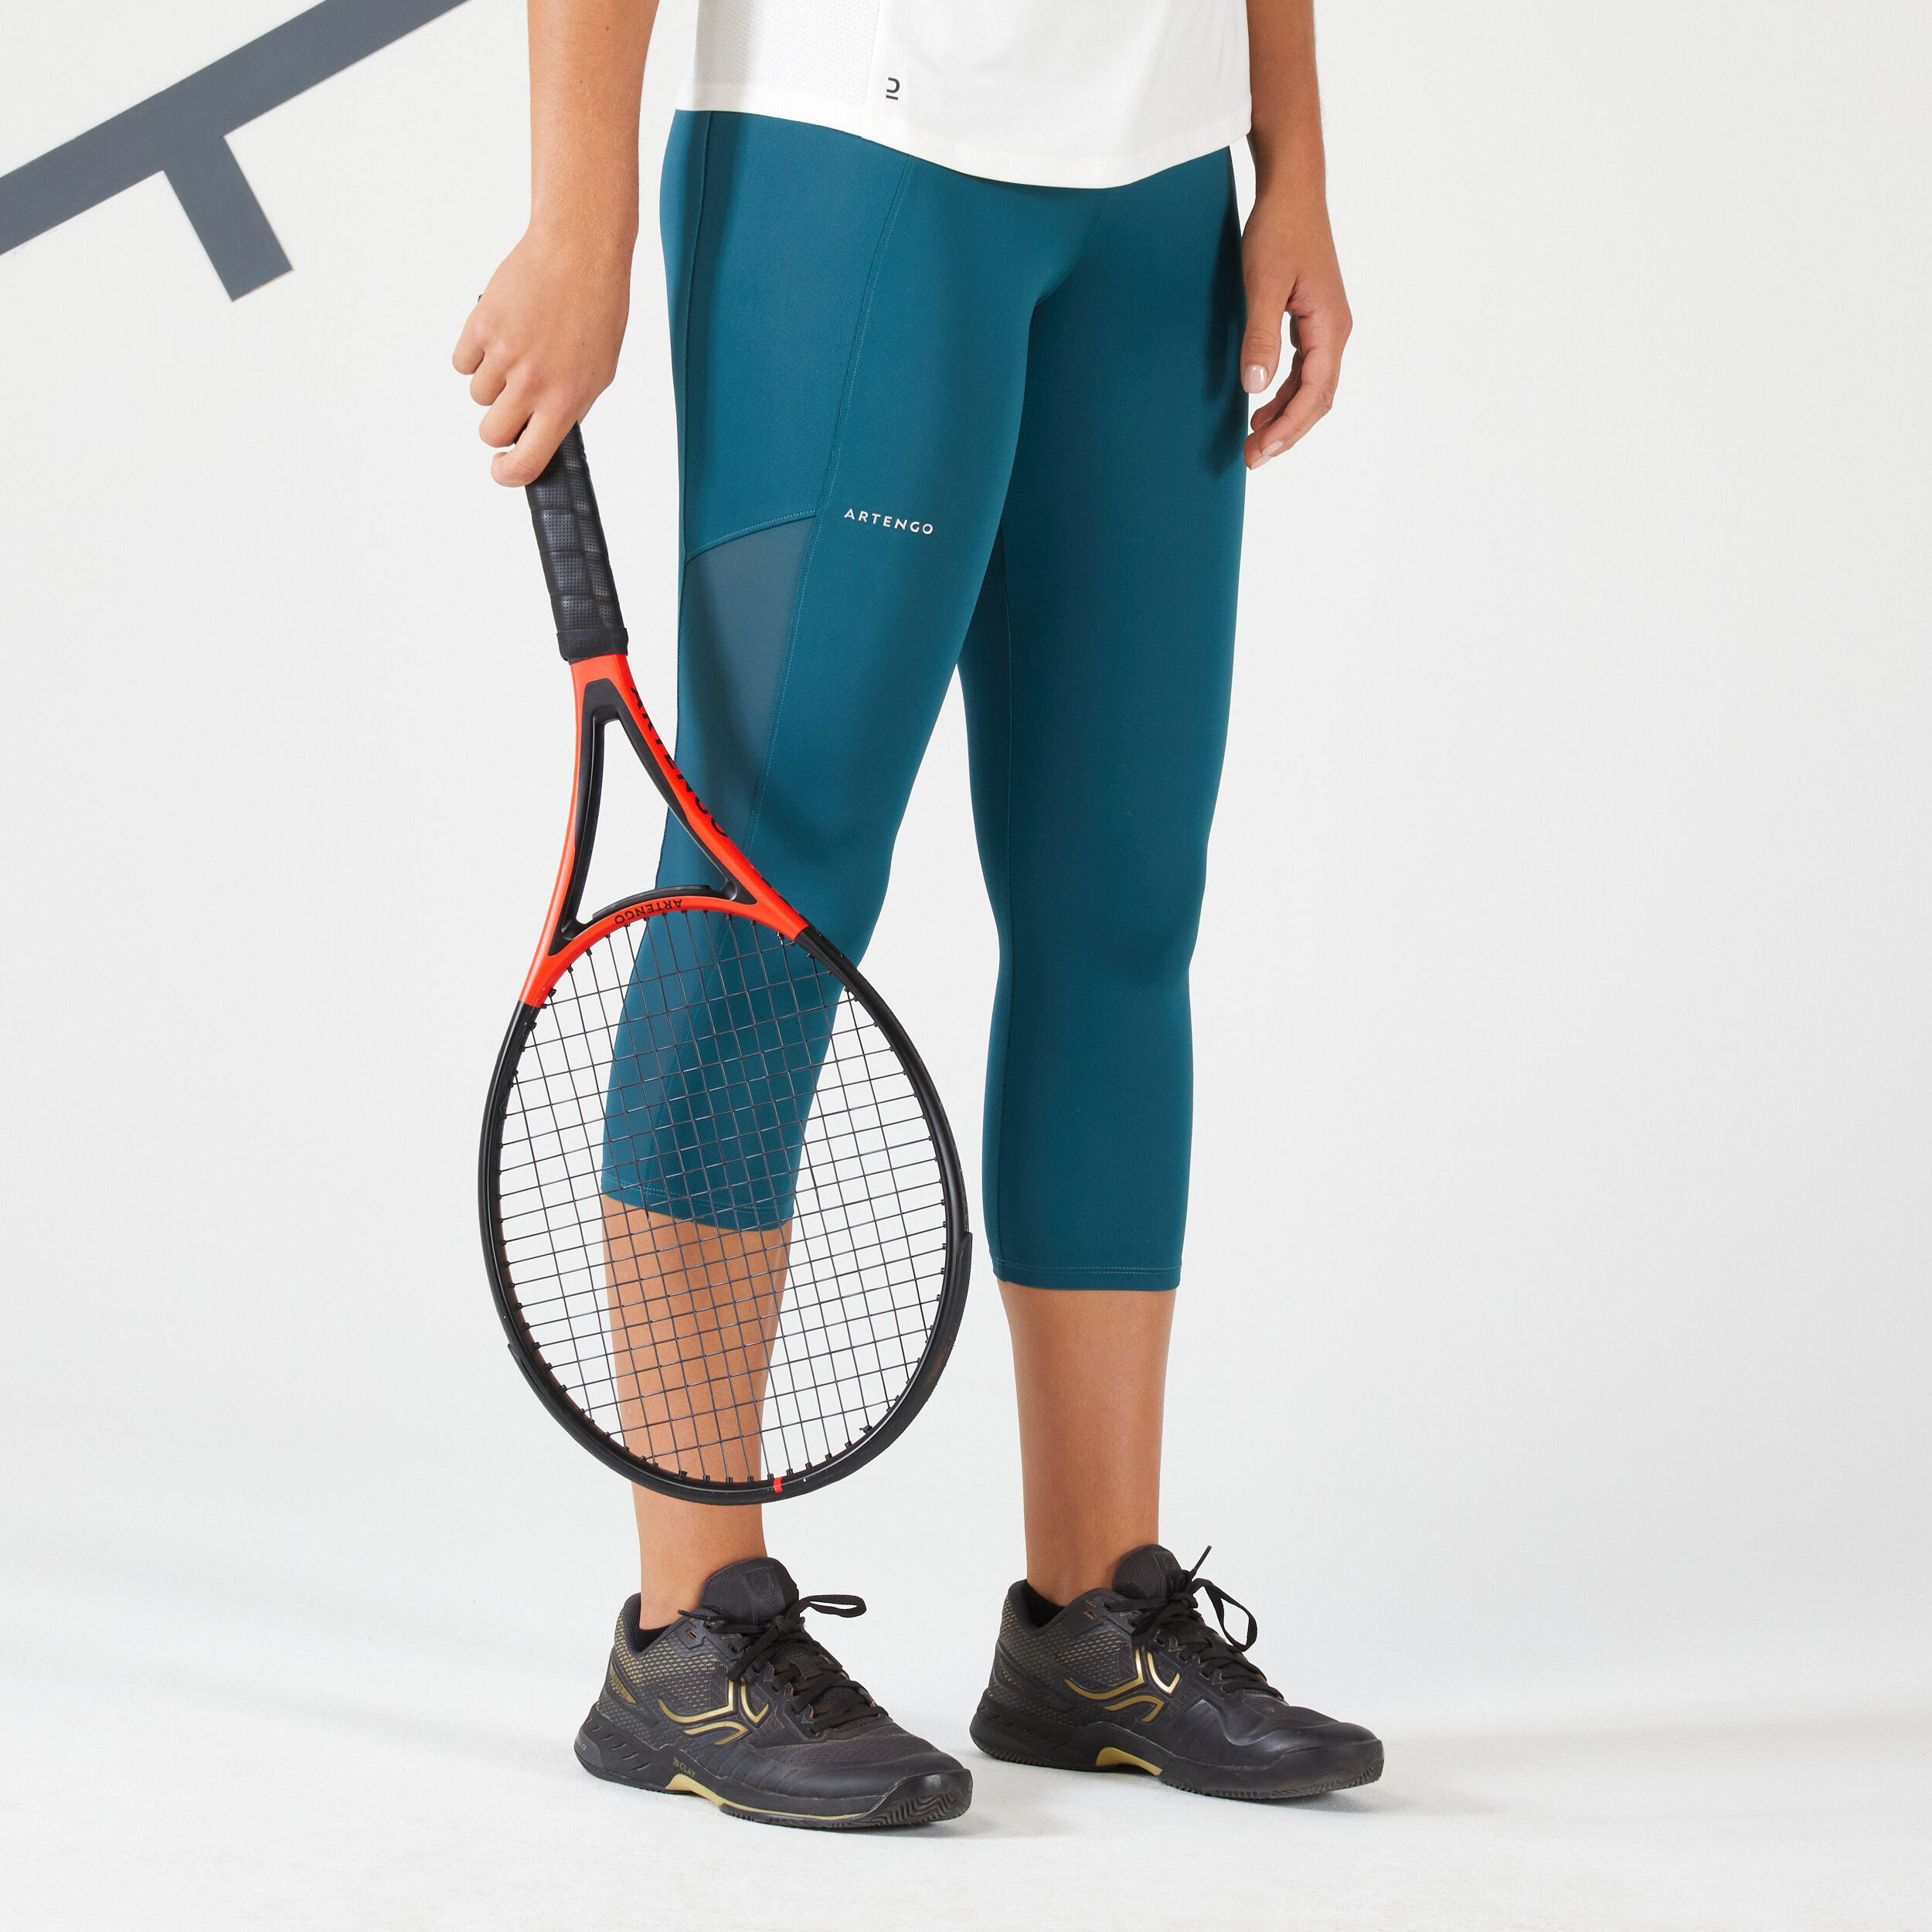 legging tennis court dry femme - corsaire dry hip ball vert foncé - artengo